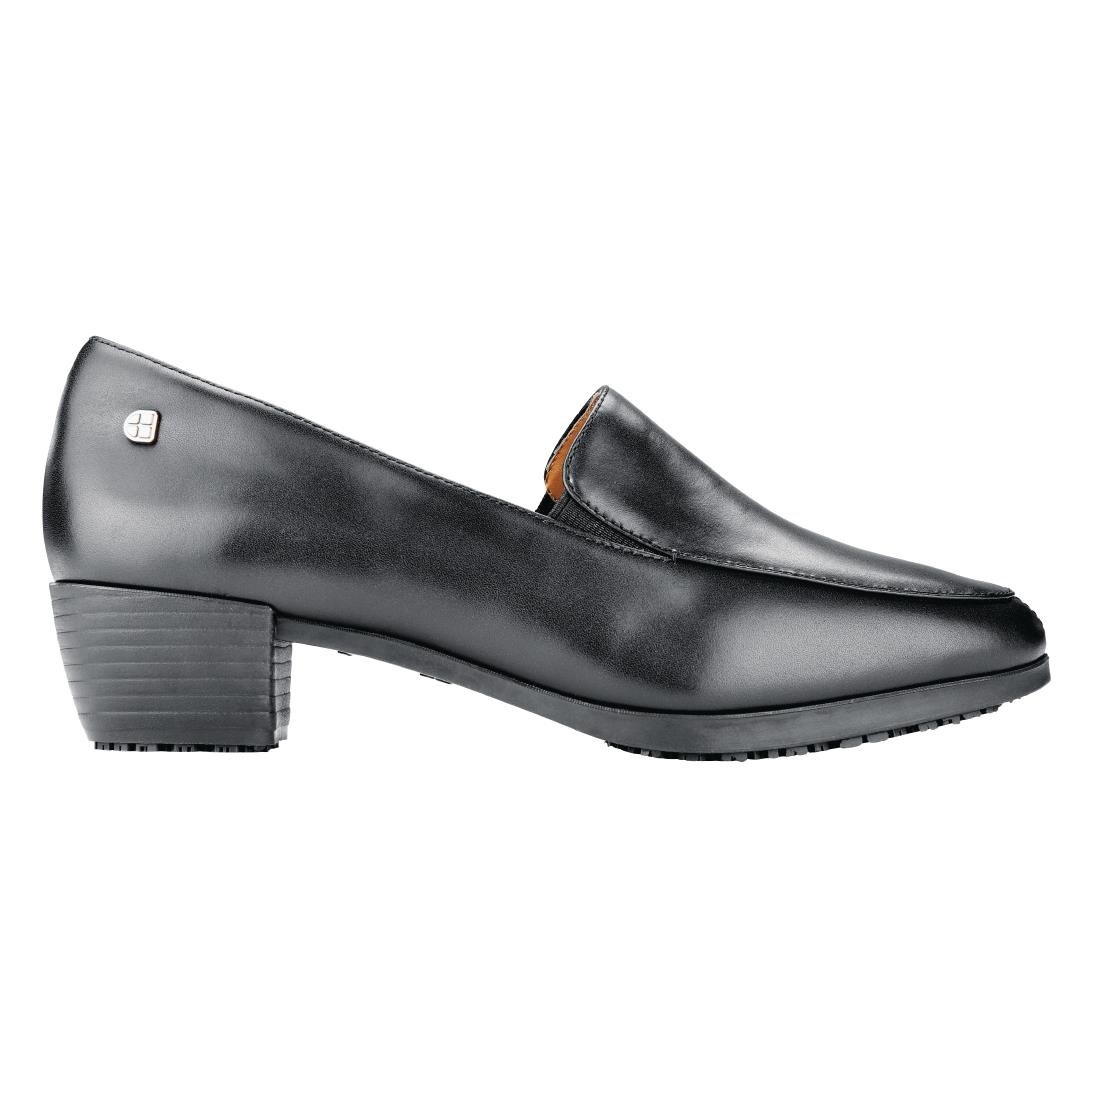 BB605-39 Shoes for Crews Envy Slip On Dress Shoe Black Size 39